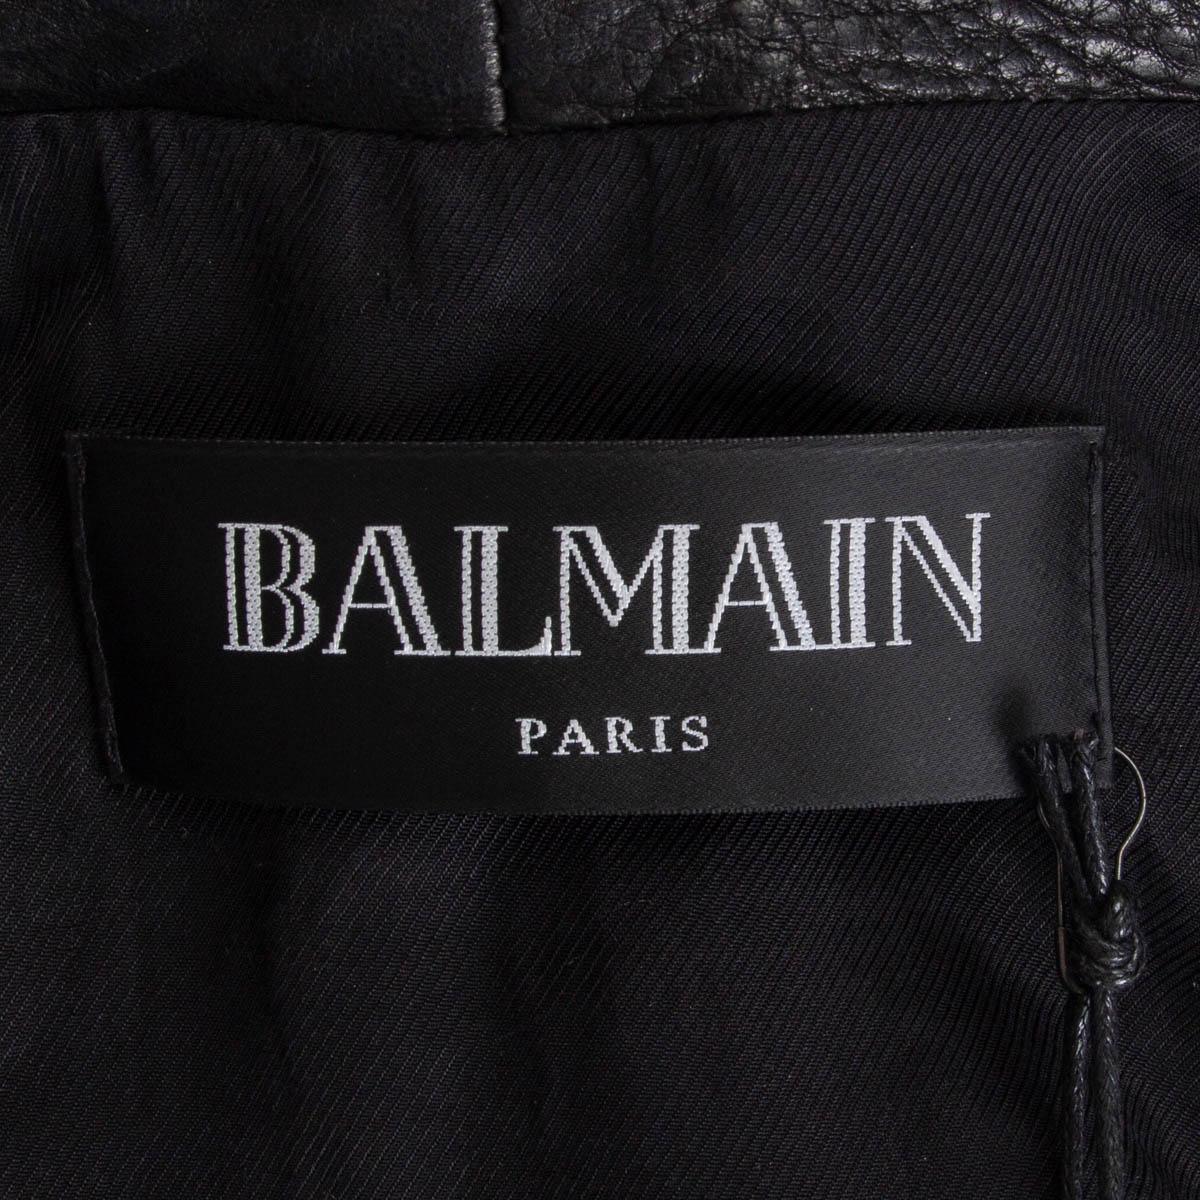 BALMAIN black leather FUR TRIM Jacket 38 S 2